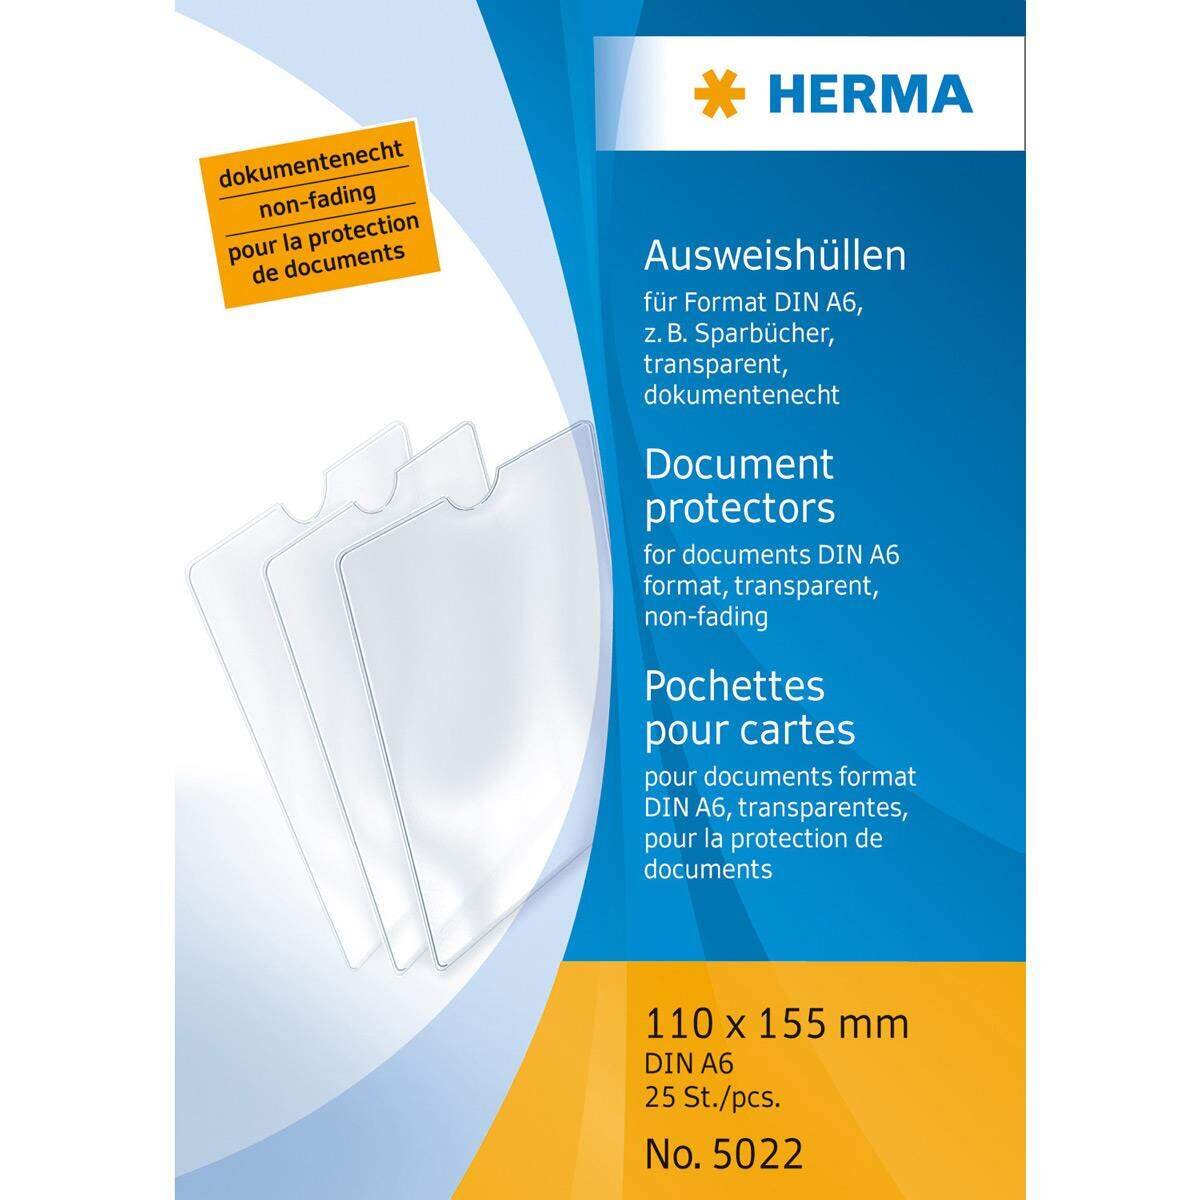 HERMA Ausweishüllen für Format DIN A6 Sparbücher, 110 x 155mm, 1 Stück